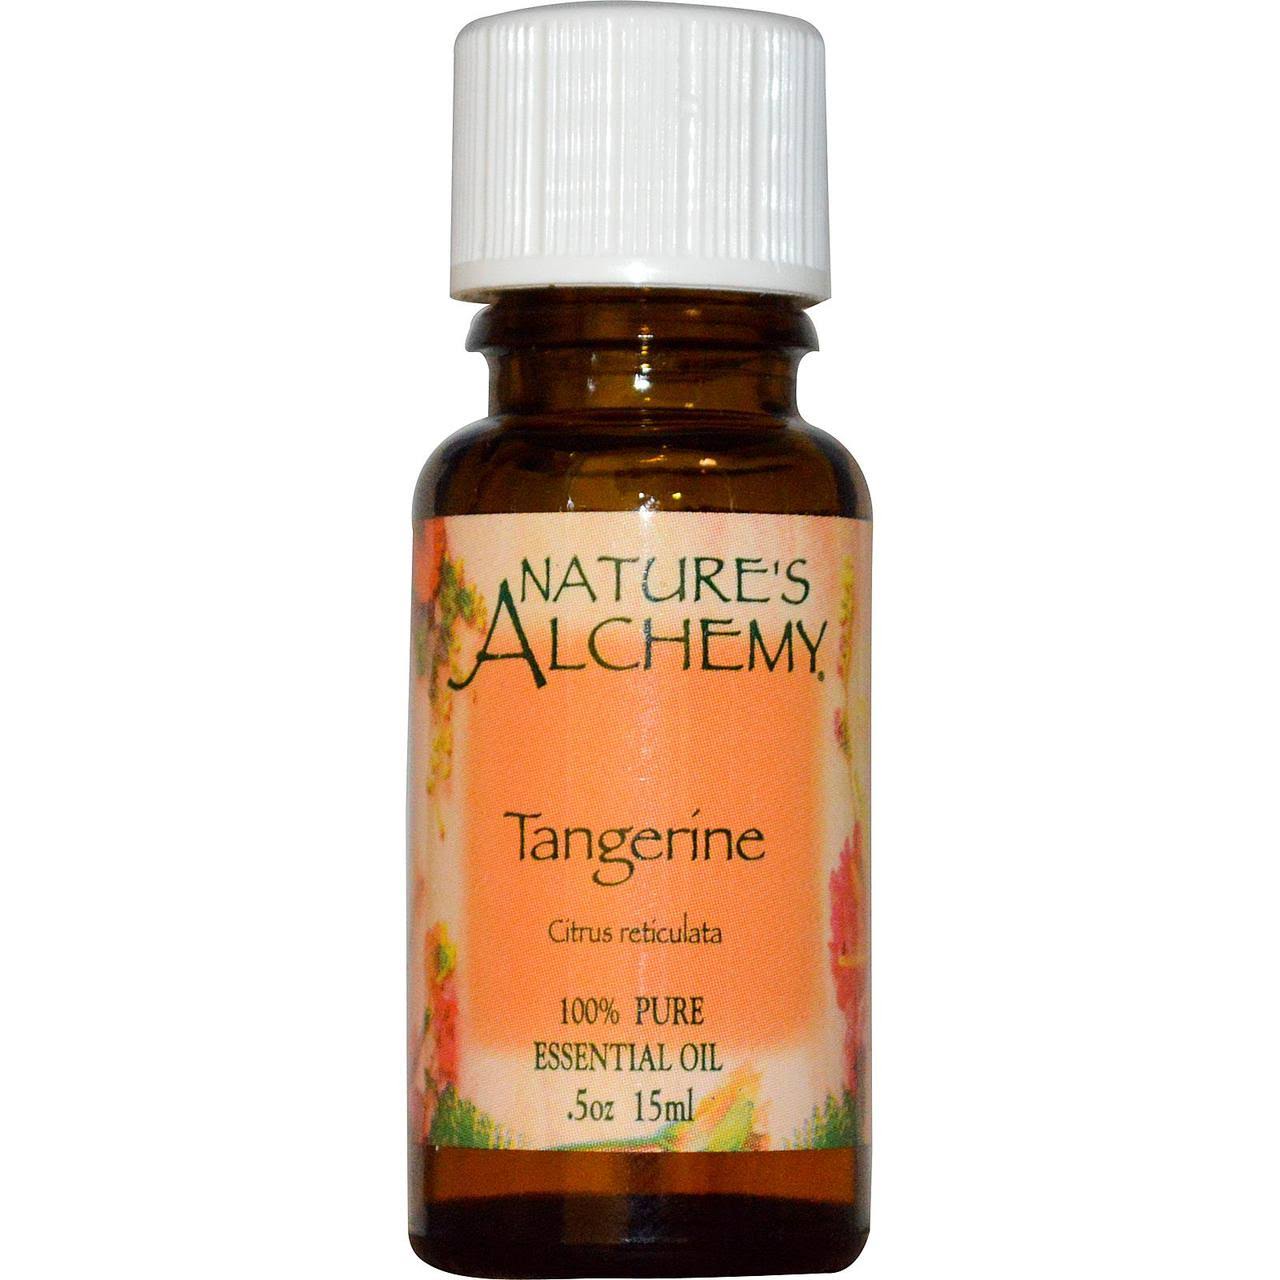 Nature's Alchemy Pure Essential Oil - Tangerine, 0.5oz